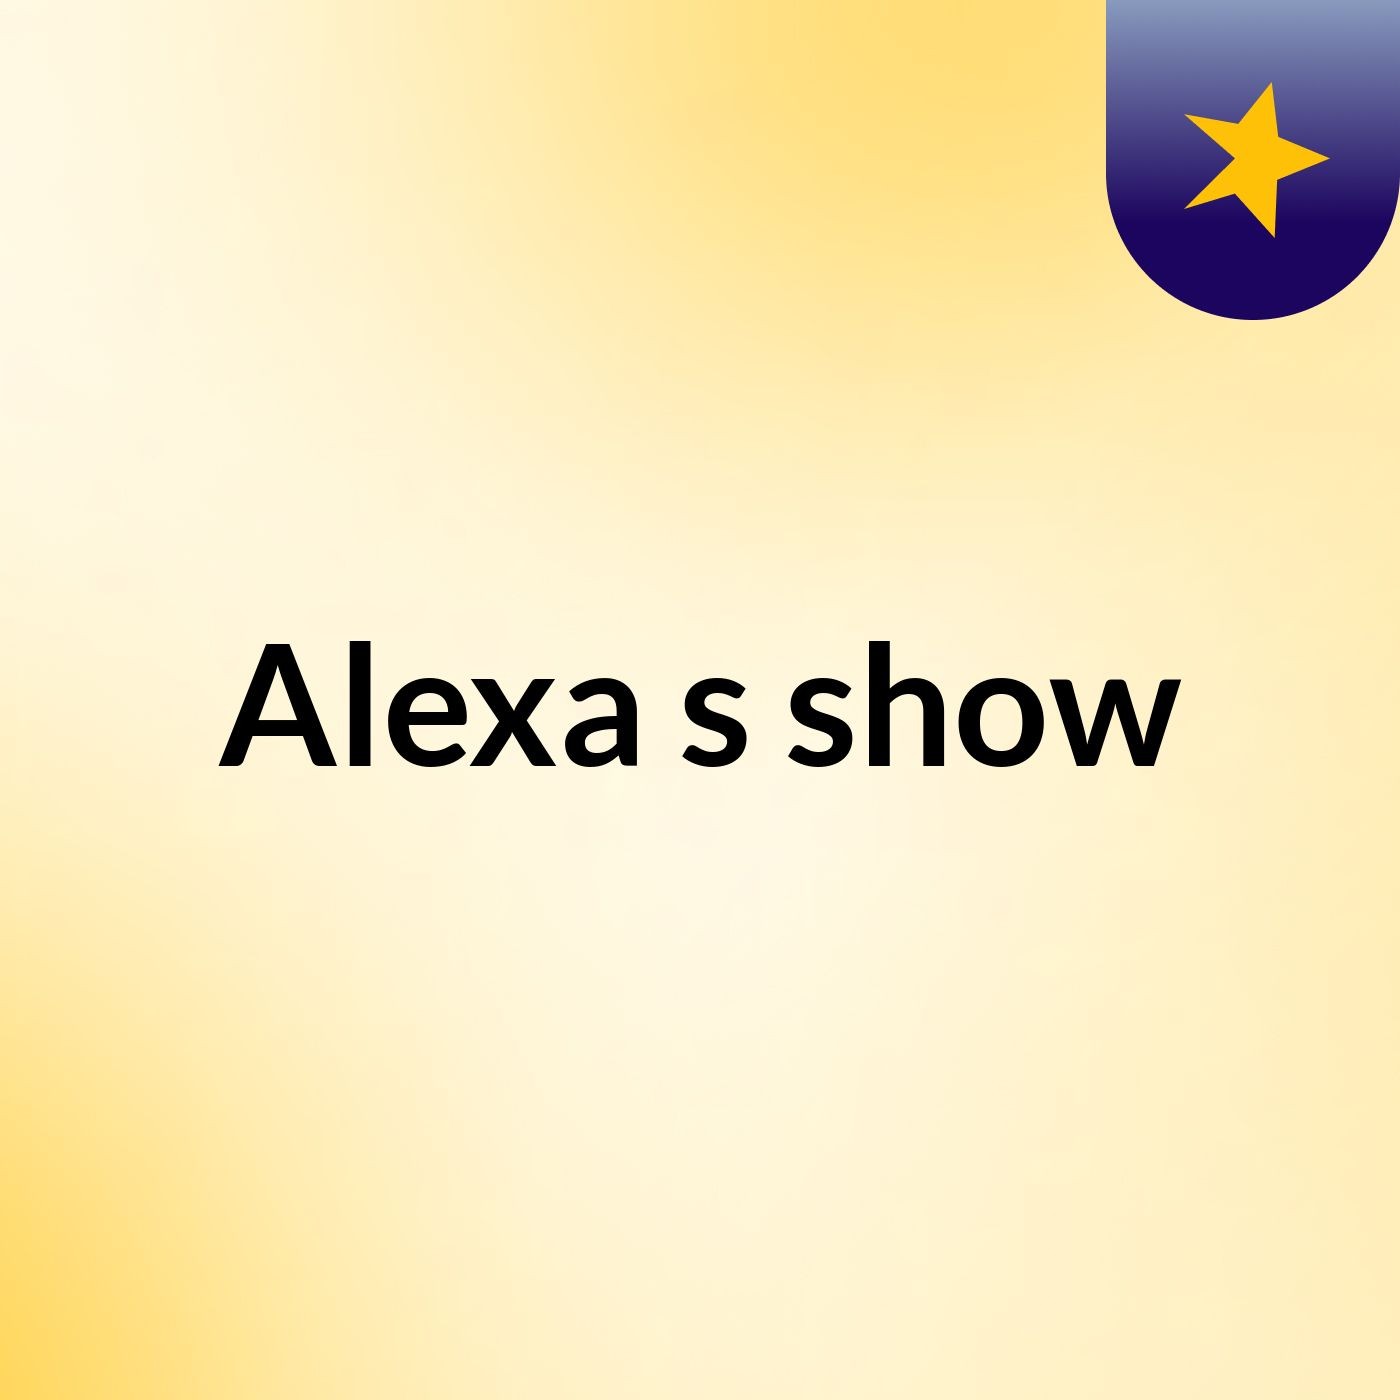 Alexa's show